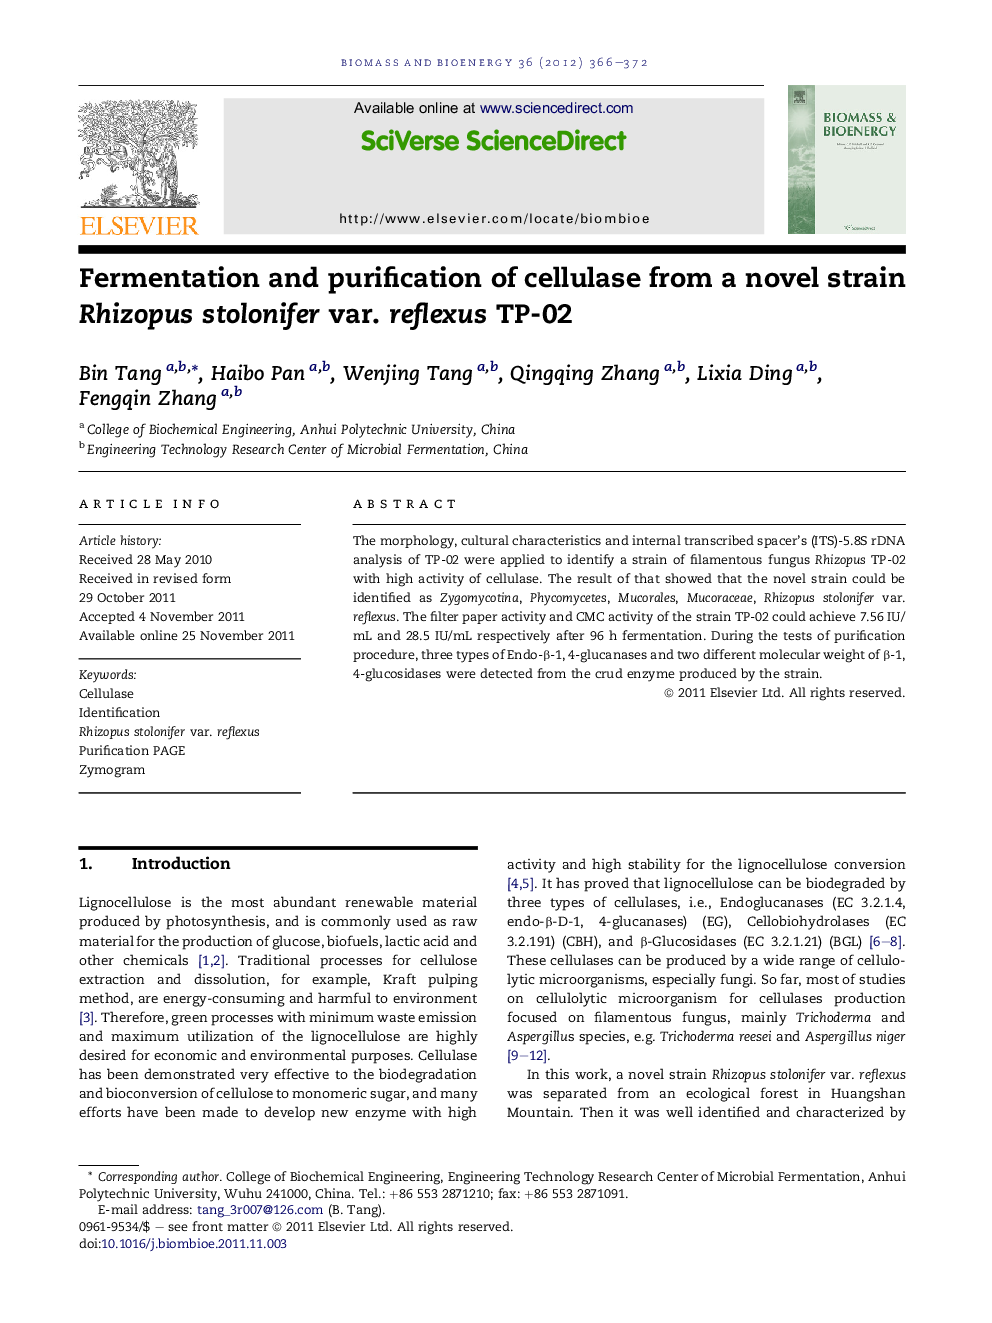 Fermentation and purification of cellulase from a novel strain Rhizopus stolonifer var. reflexus TP-02